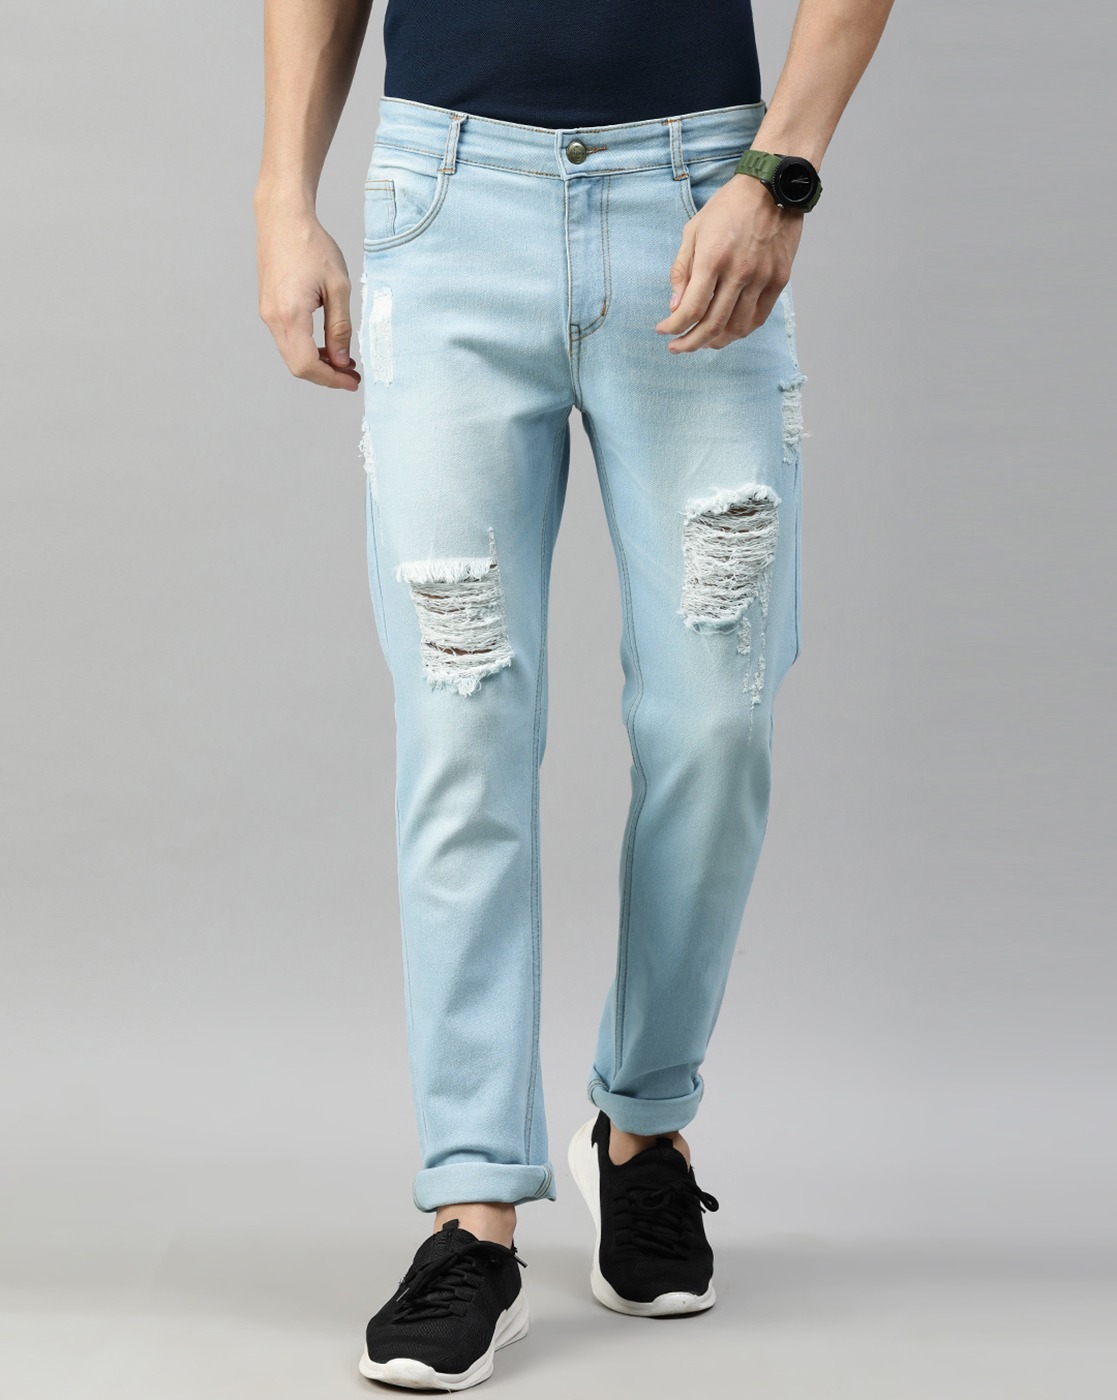 Buy LOUIS STITCH Men's Blue Jeans Italian Denim Cloth Super Stretch  Comfortable Slim Fit Casual Cotton Pants for Men (Waist-28) (JN-BU91-500)  at Amazon.in